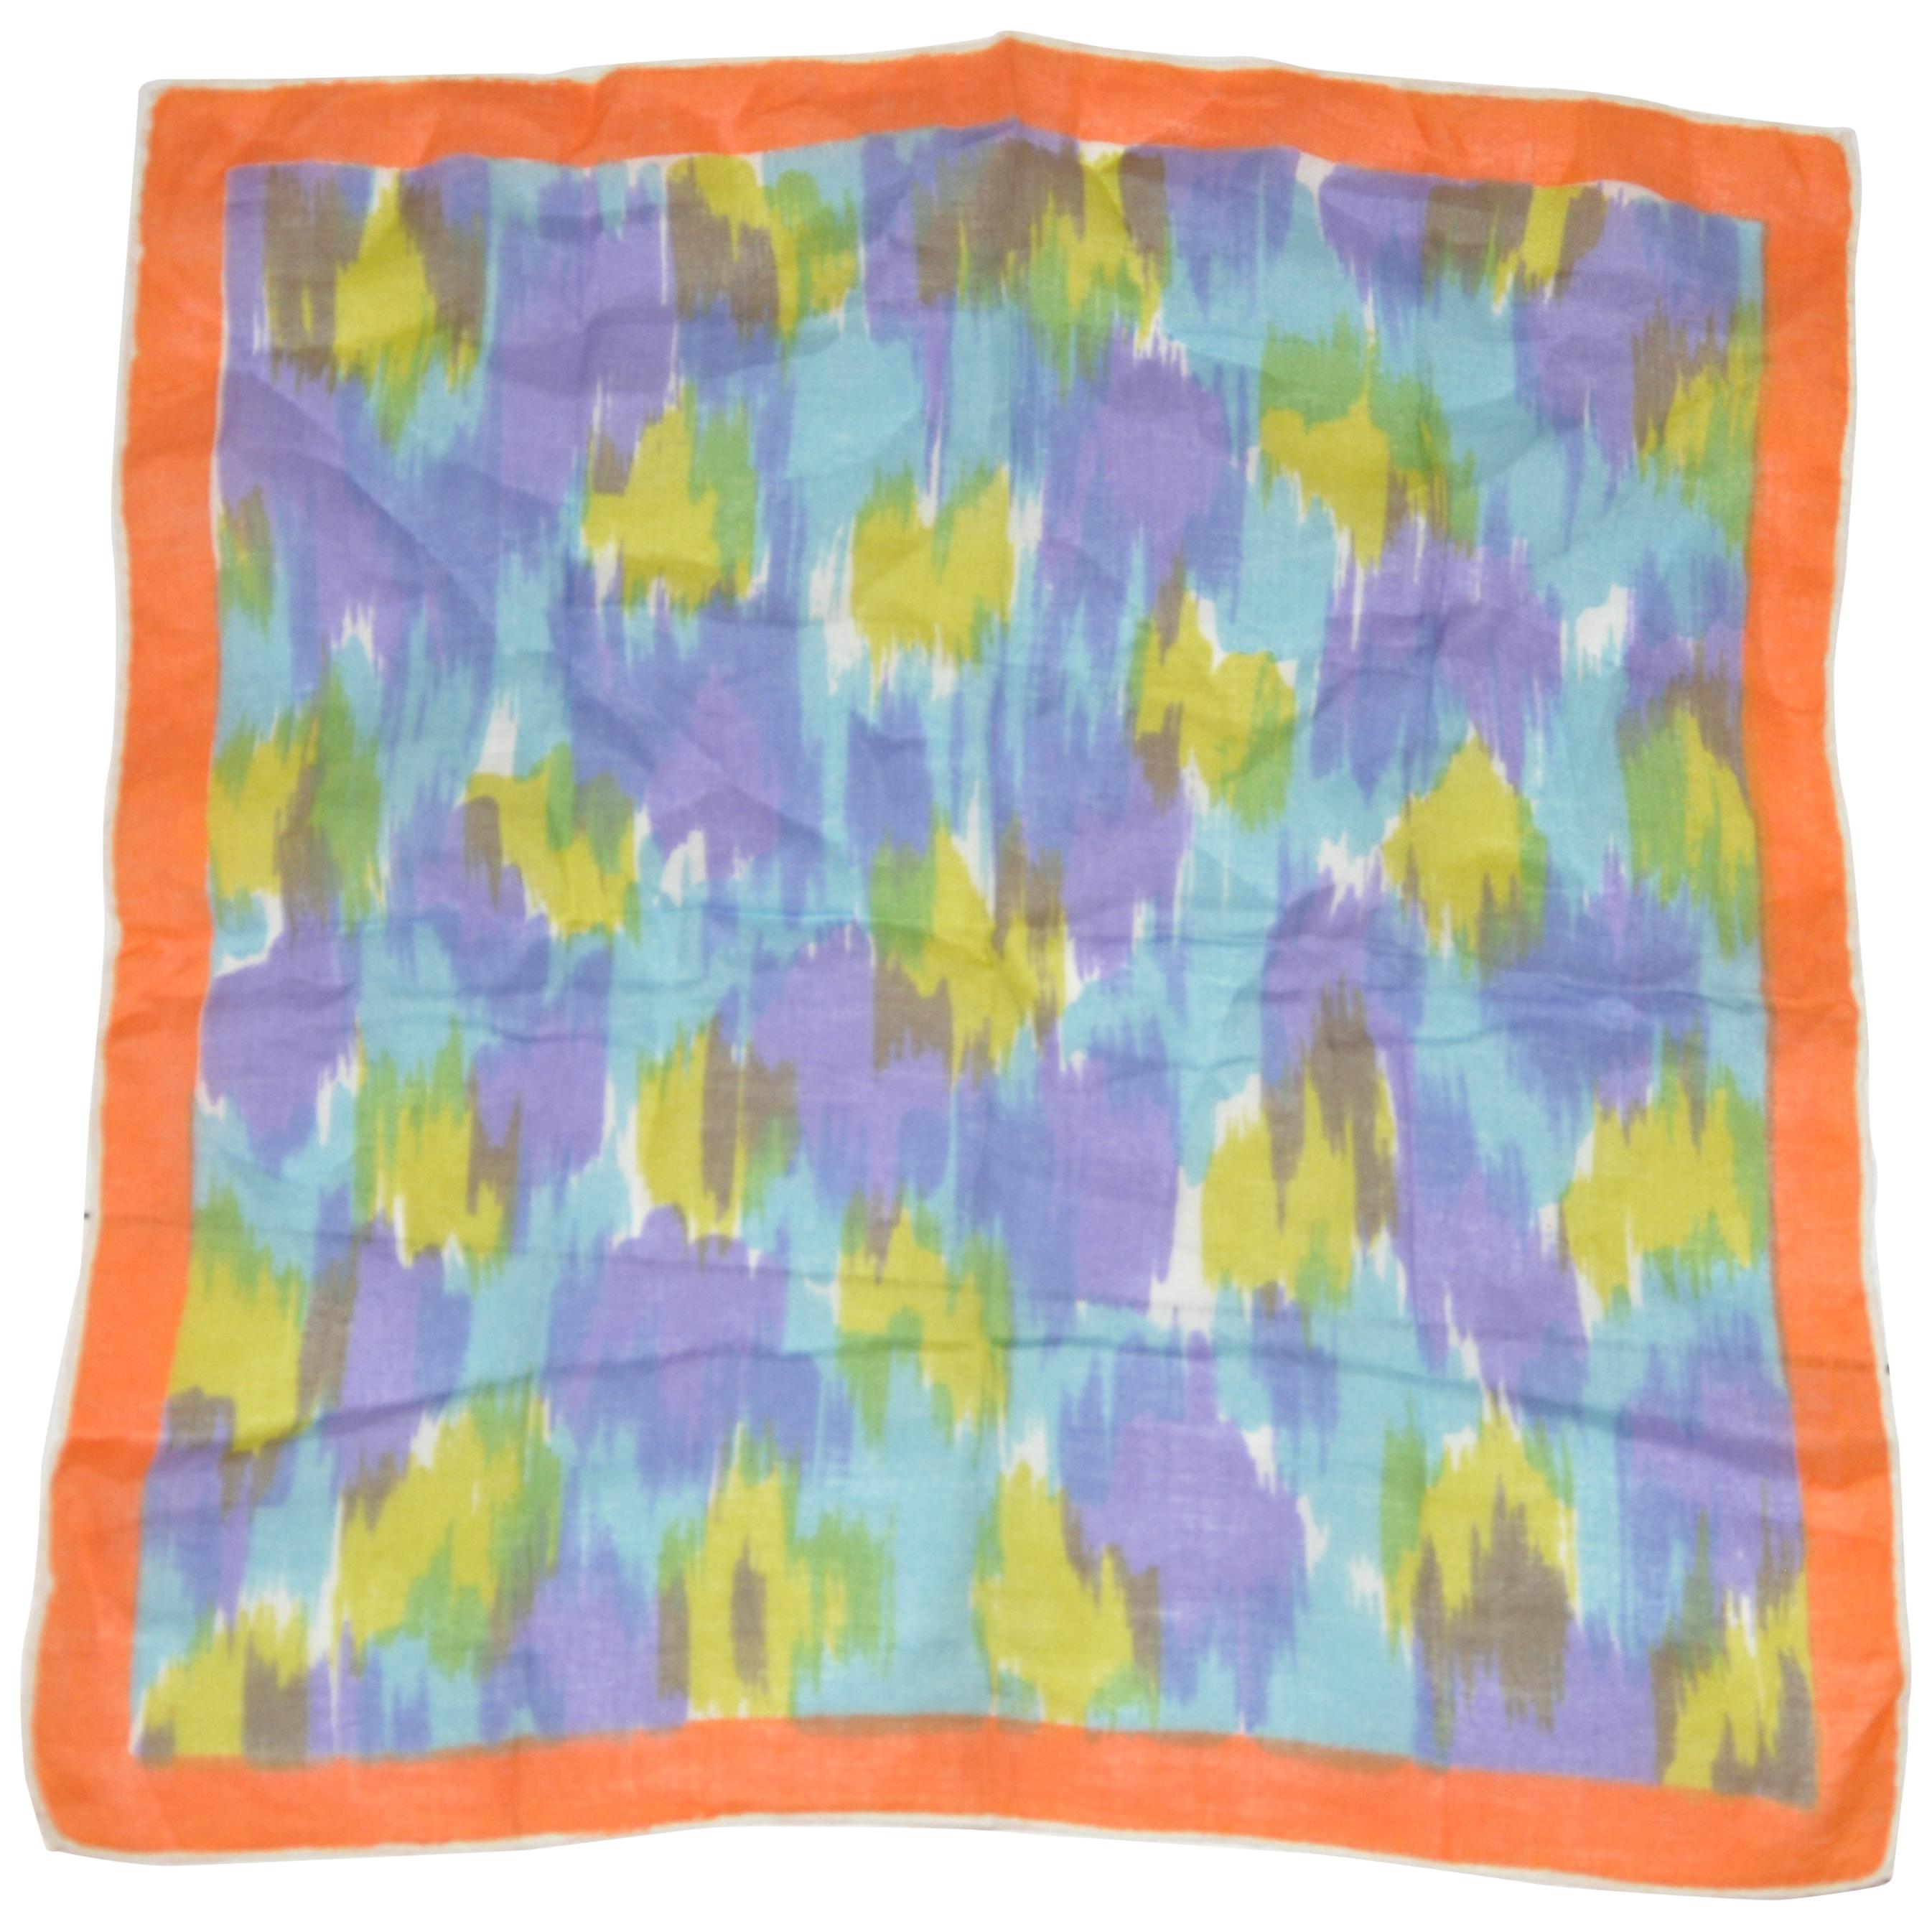 Festival Multi-Color "Brush Strokes" Cotton Hand-Rolled Edges Handkerchief